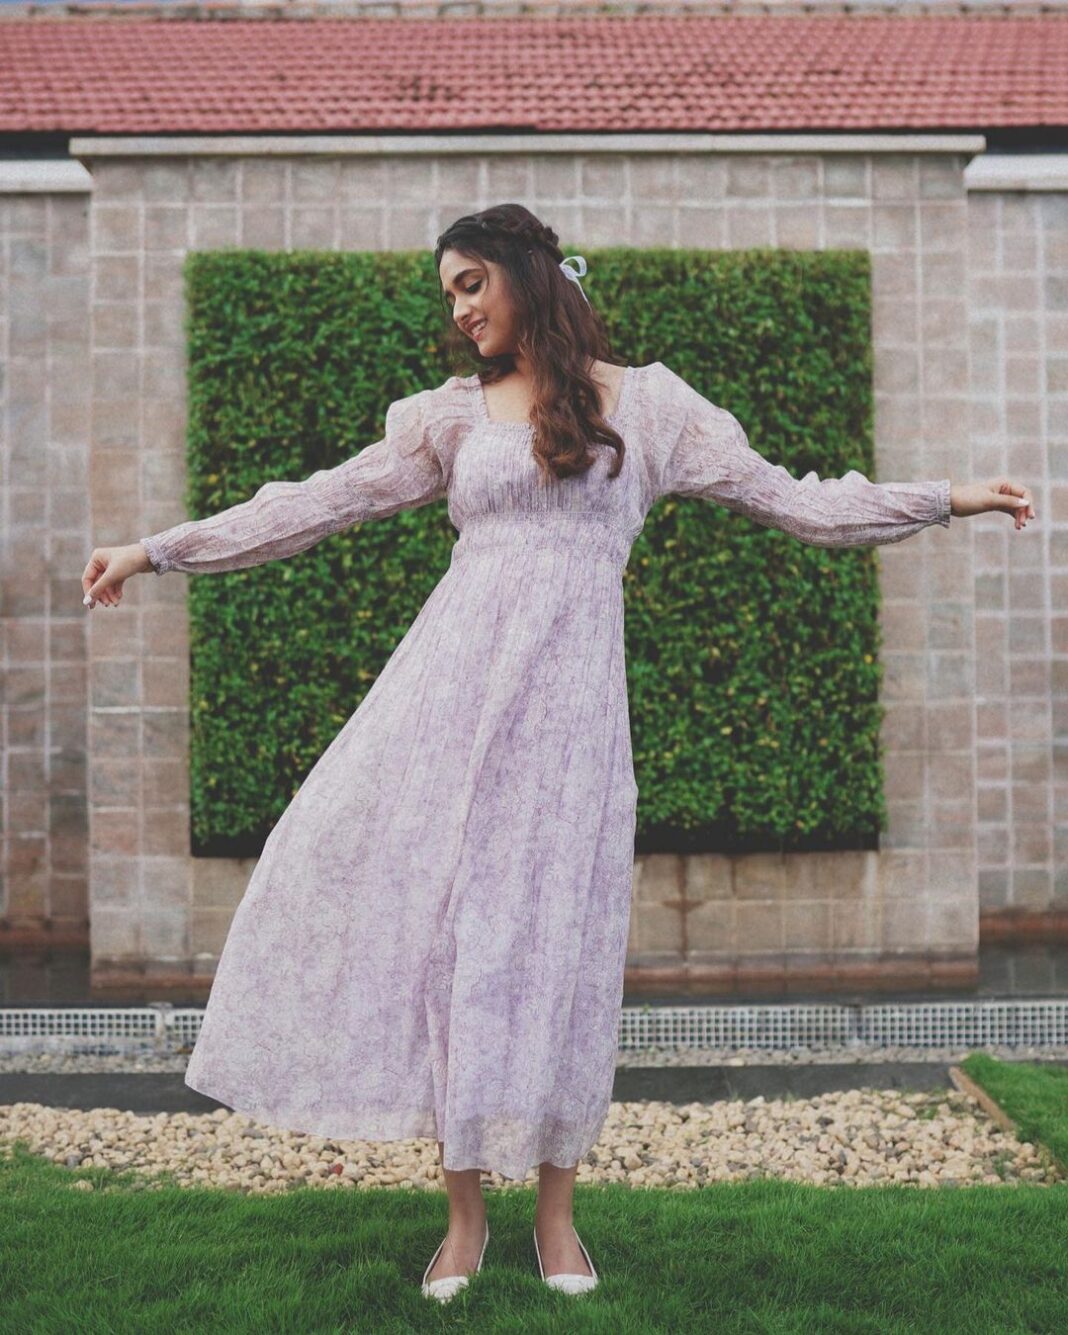 Keerthy Suresh Instagram - Getting lost in lavender 💜 #VaashiPromotions @bunastudio @shayagrams @archamehta @ruchi.munoth @vishalcharanmakeuphair @deepabambhaniya08 @down__trodden @diajohnphotography